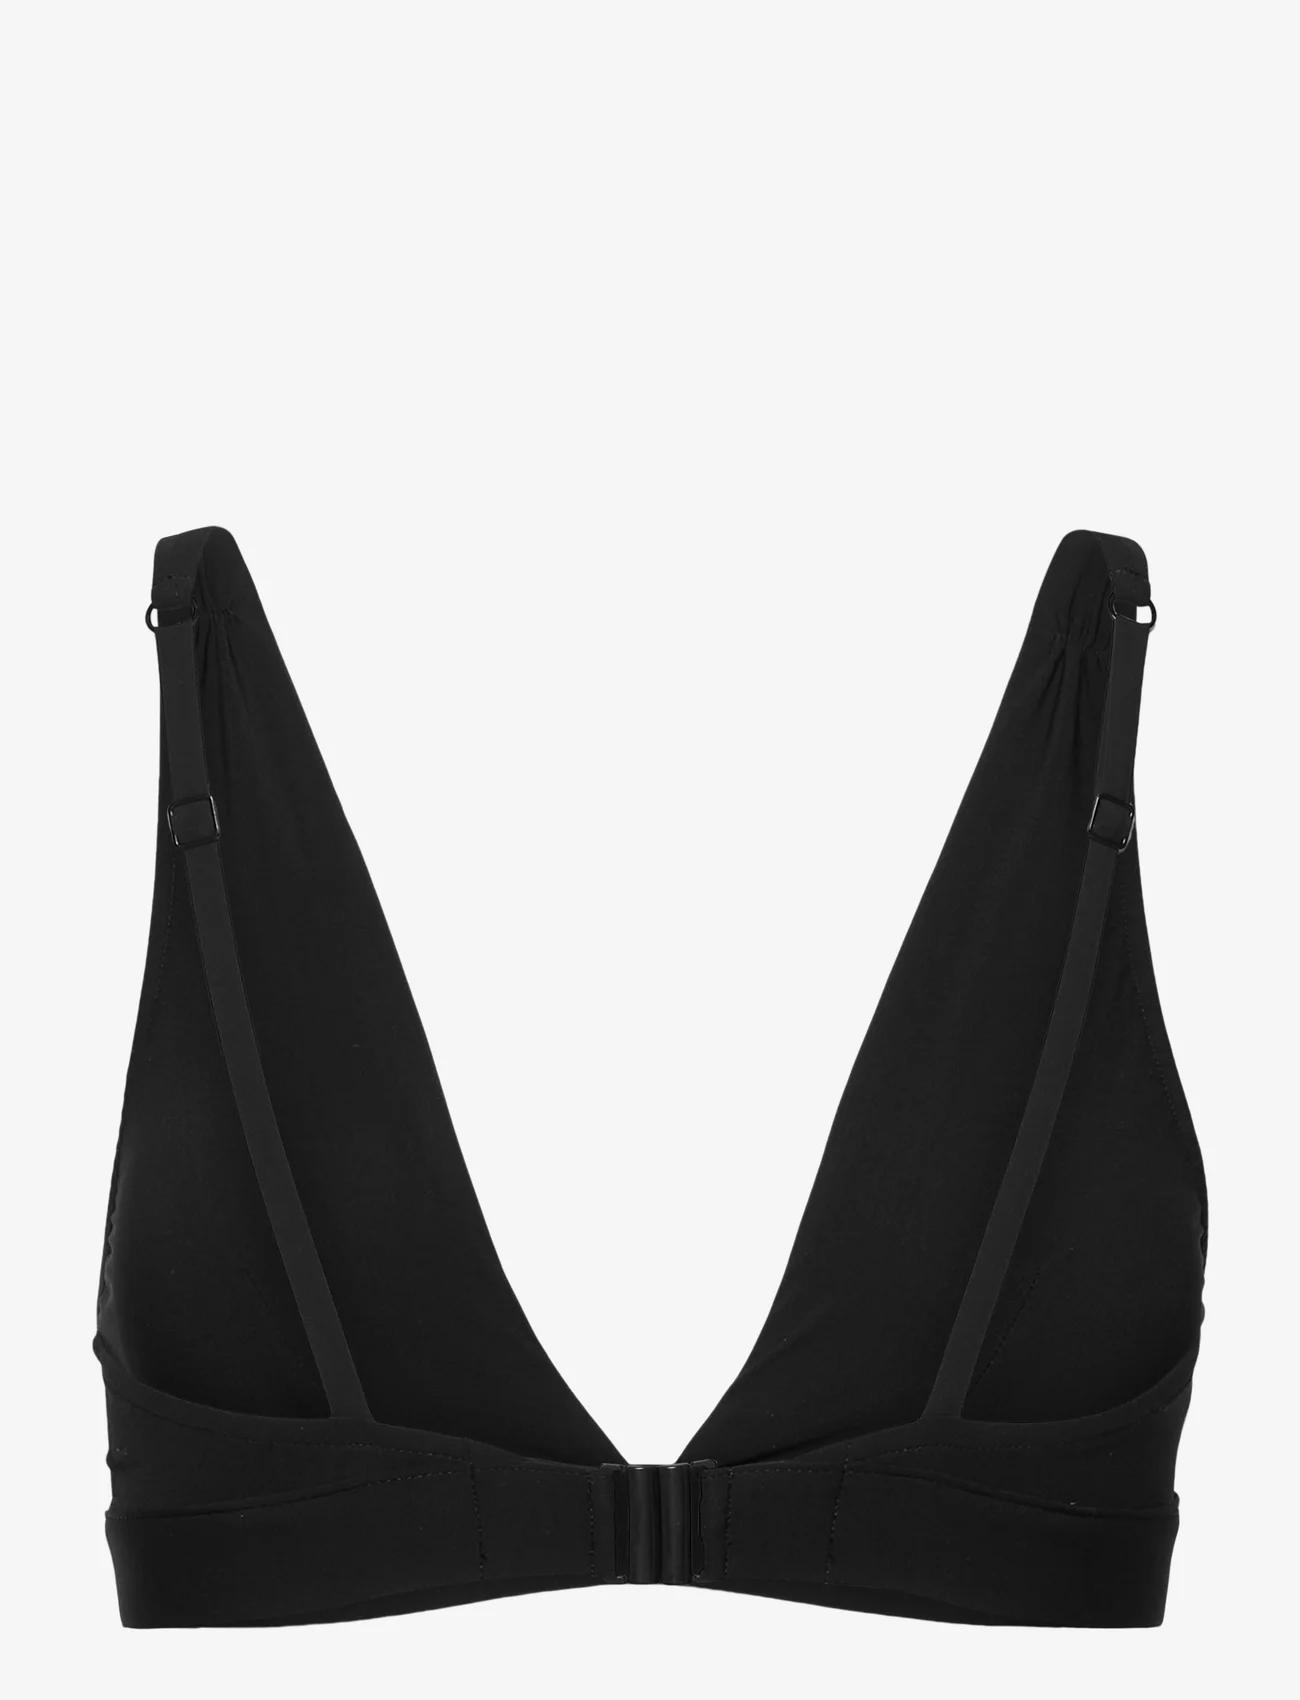 CHANTELLE - Inspire Wirefree plunge bra - triangle bikinis - black - 1